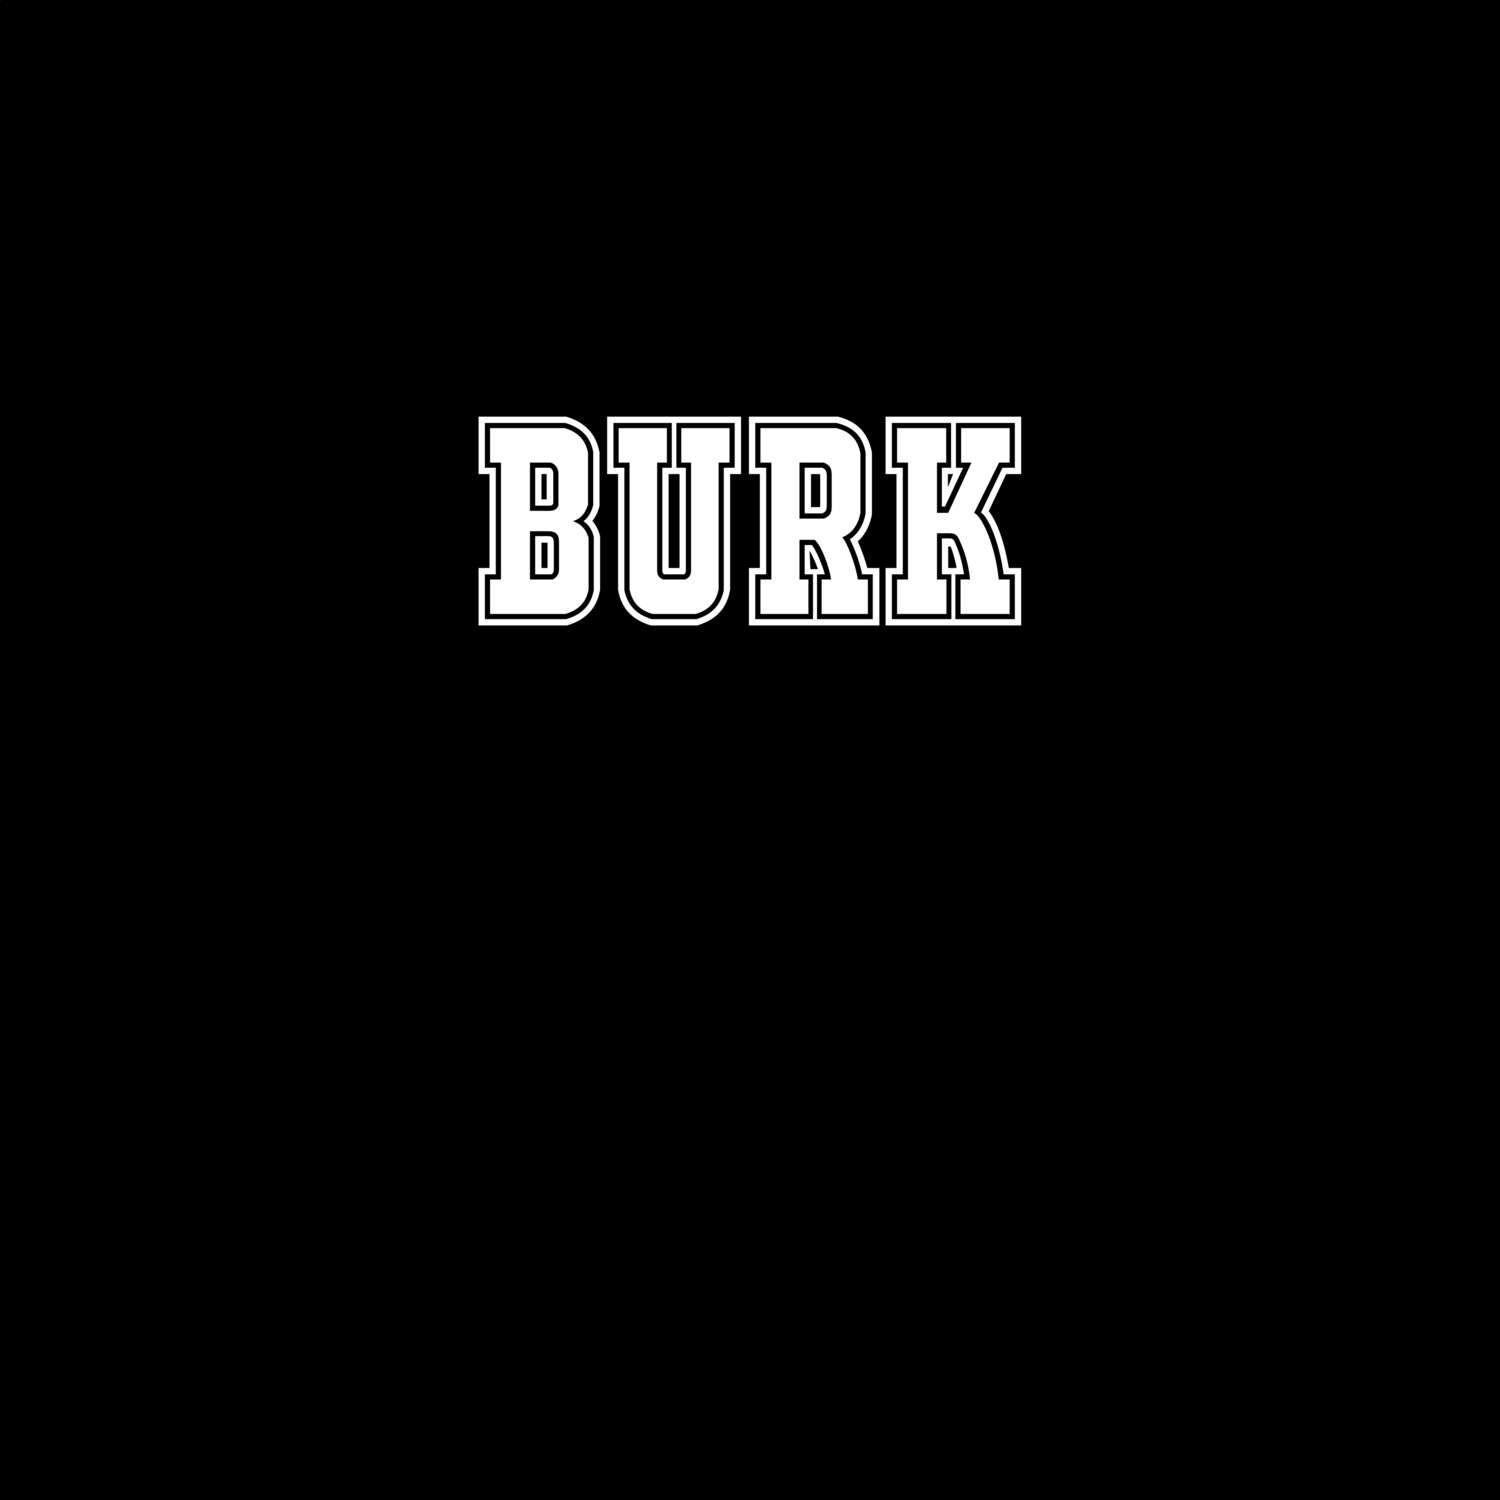 Burk T-Shirt »Classic«